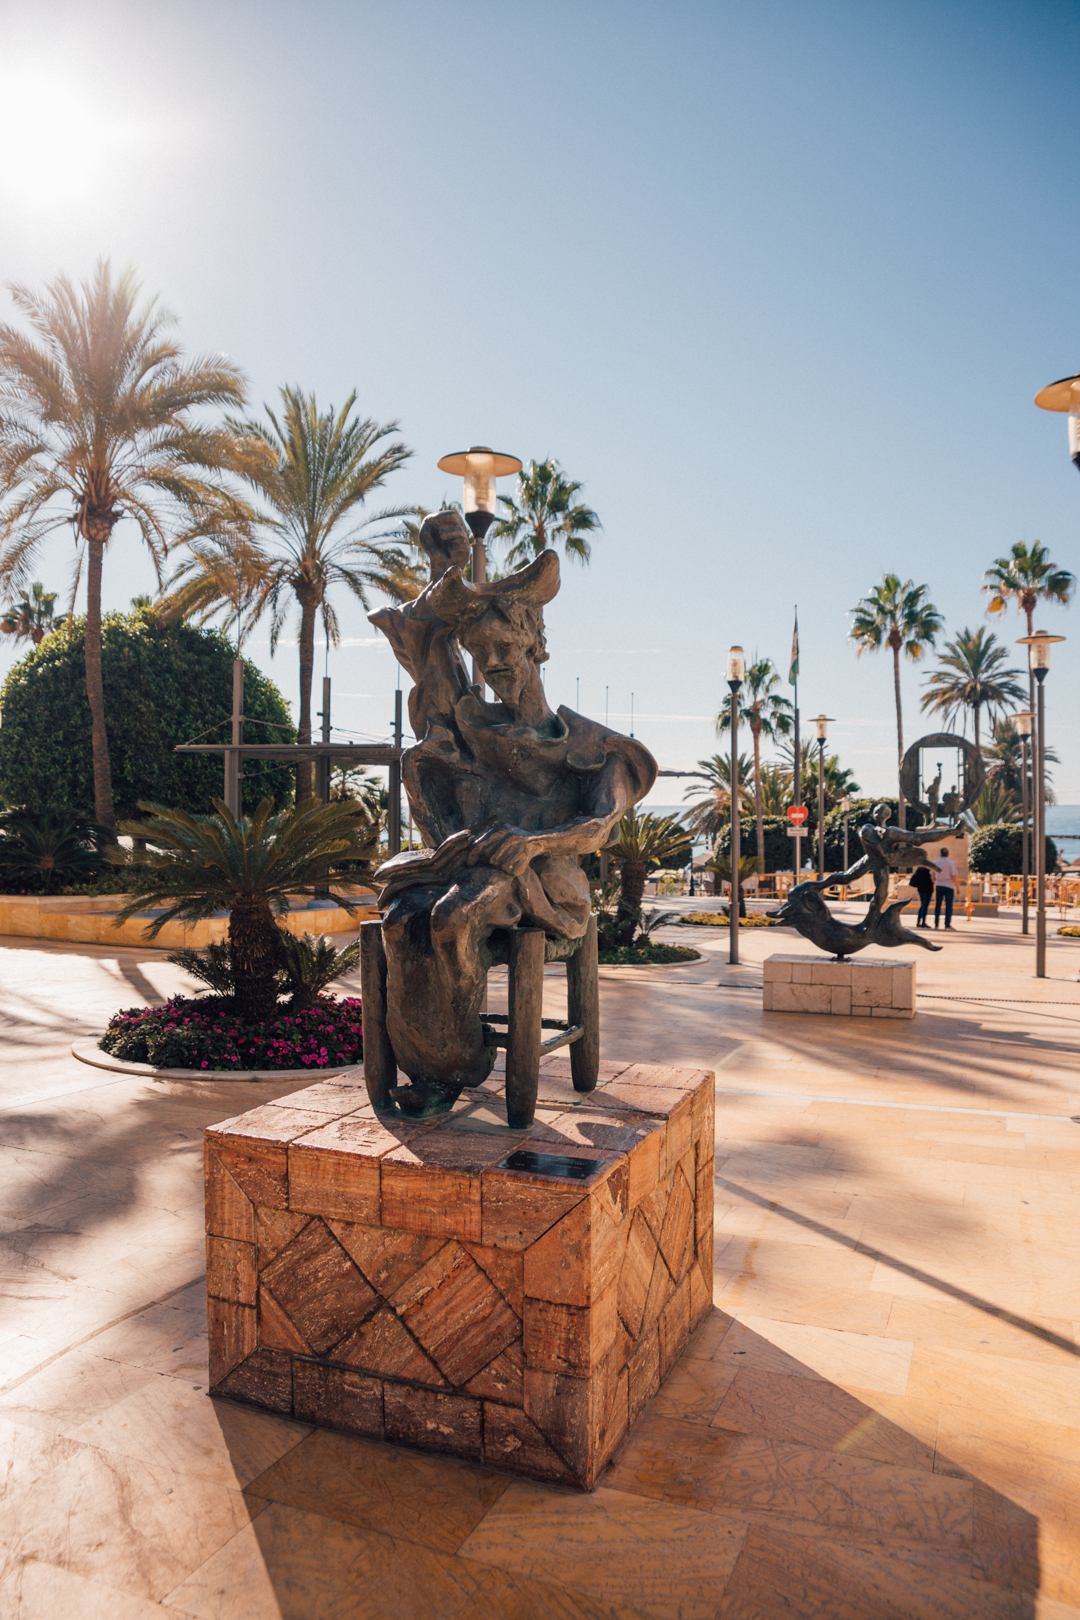 Dahli statues at Avenida del Mar in Marbella